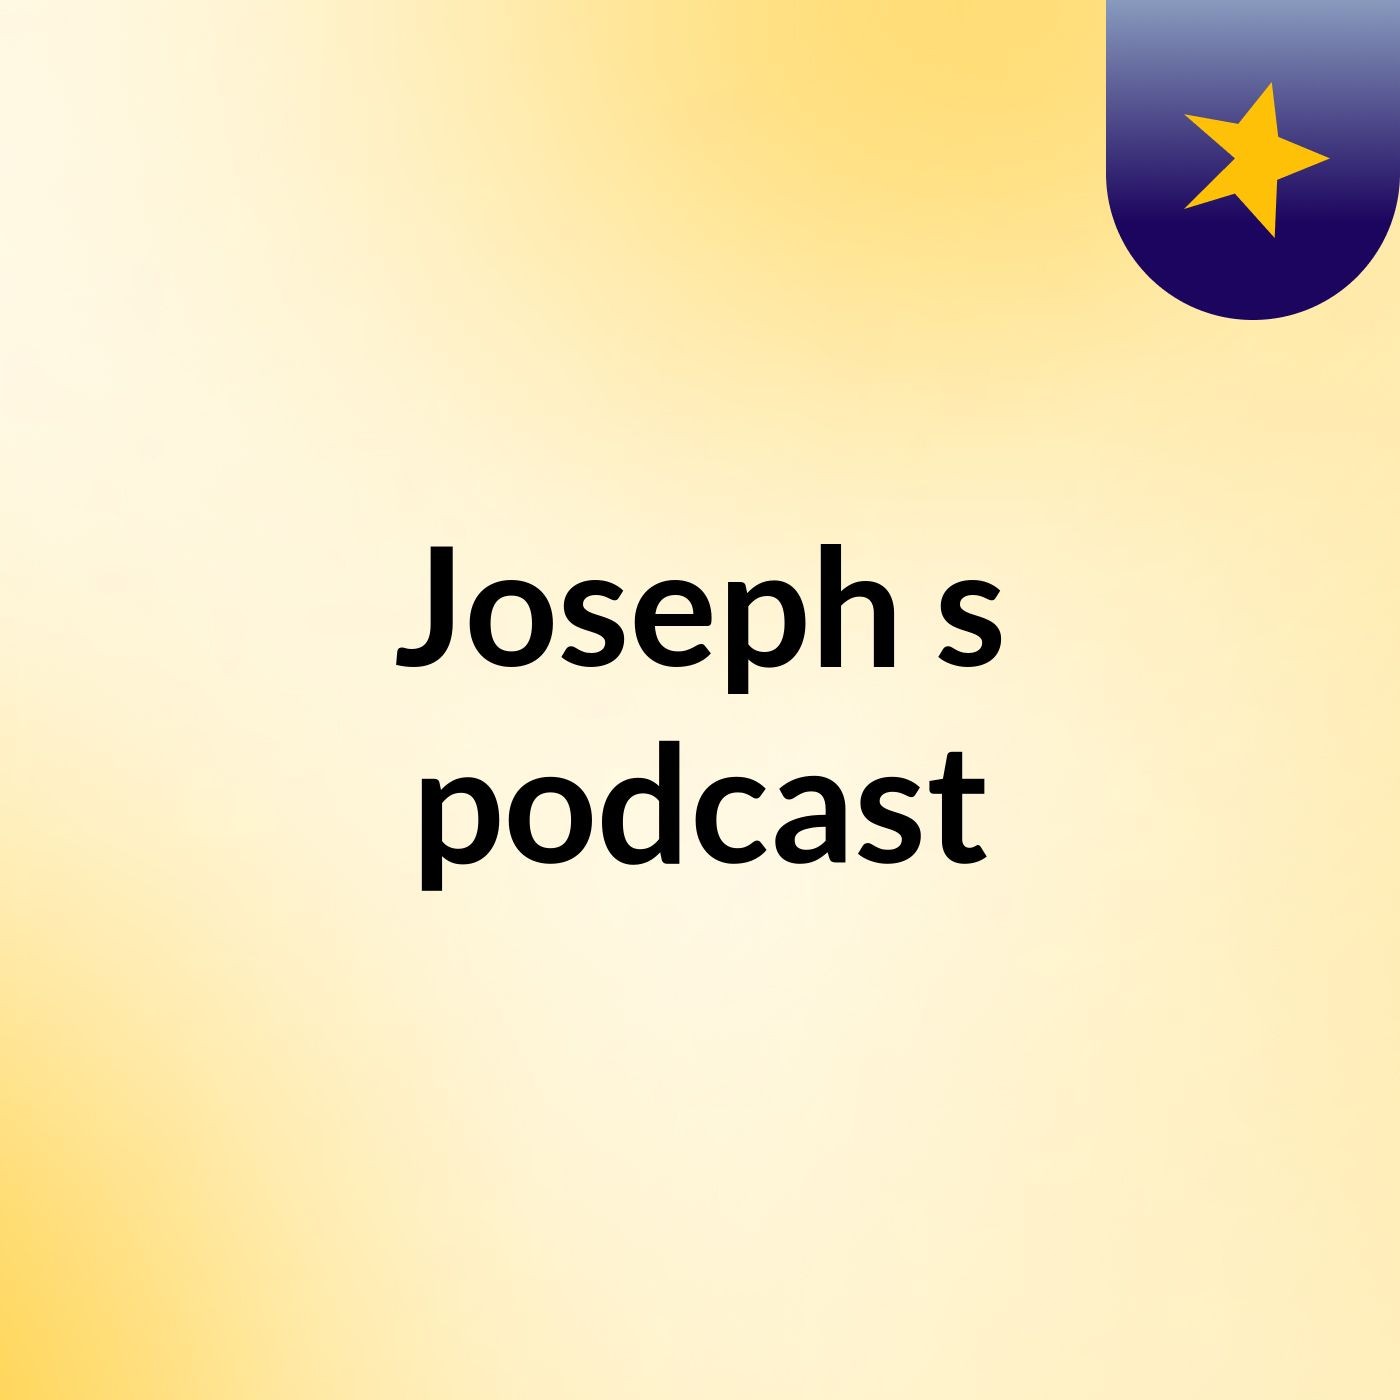 Episode 2 - Joseph's podcast